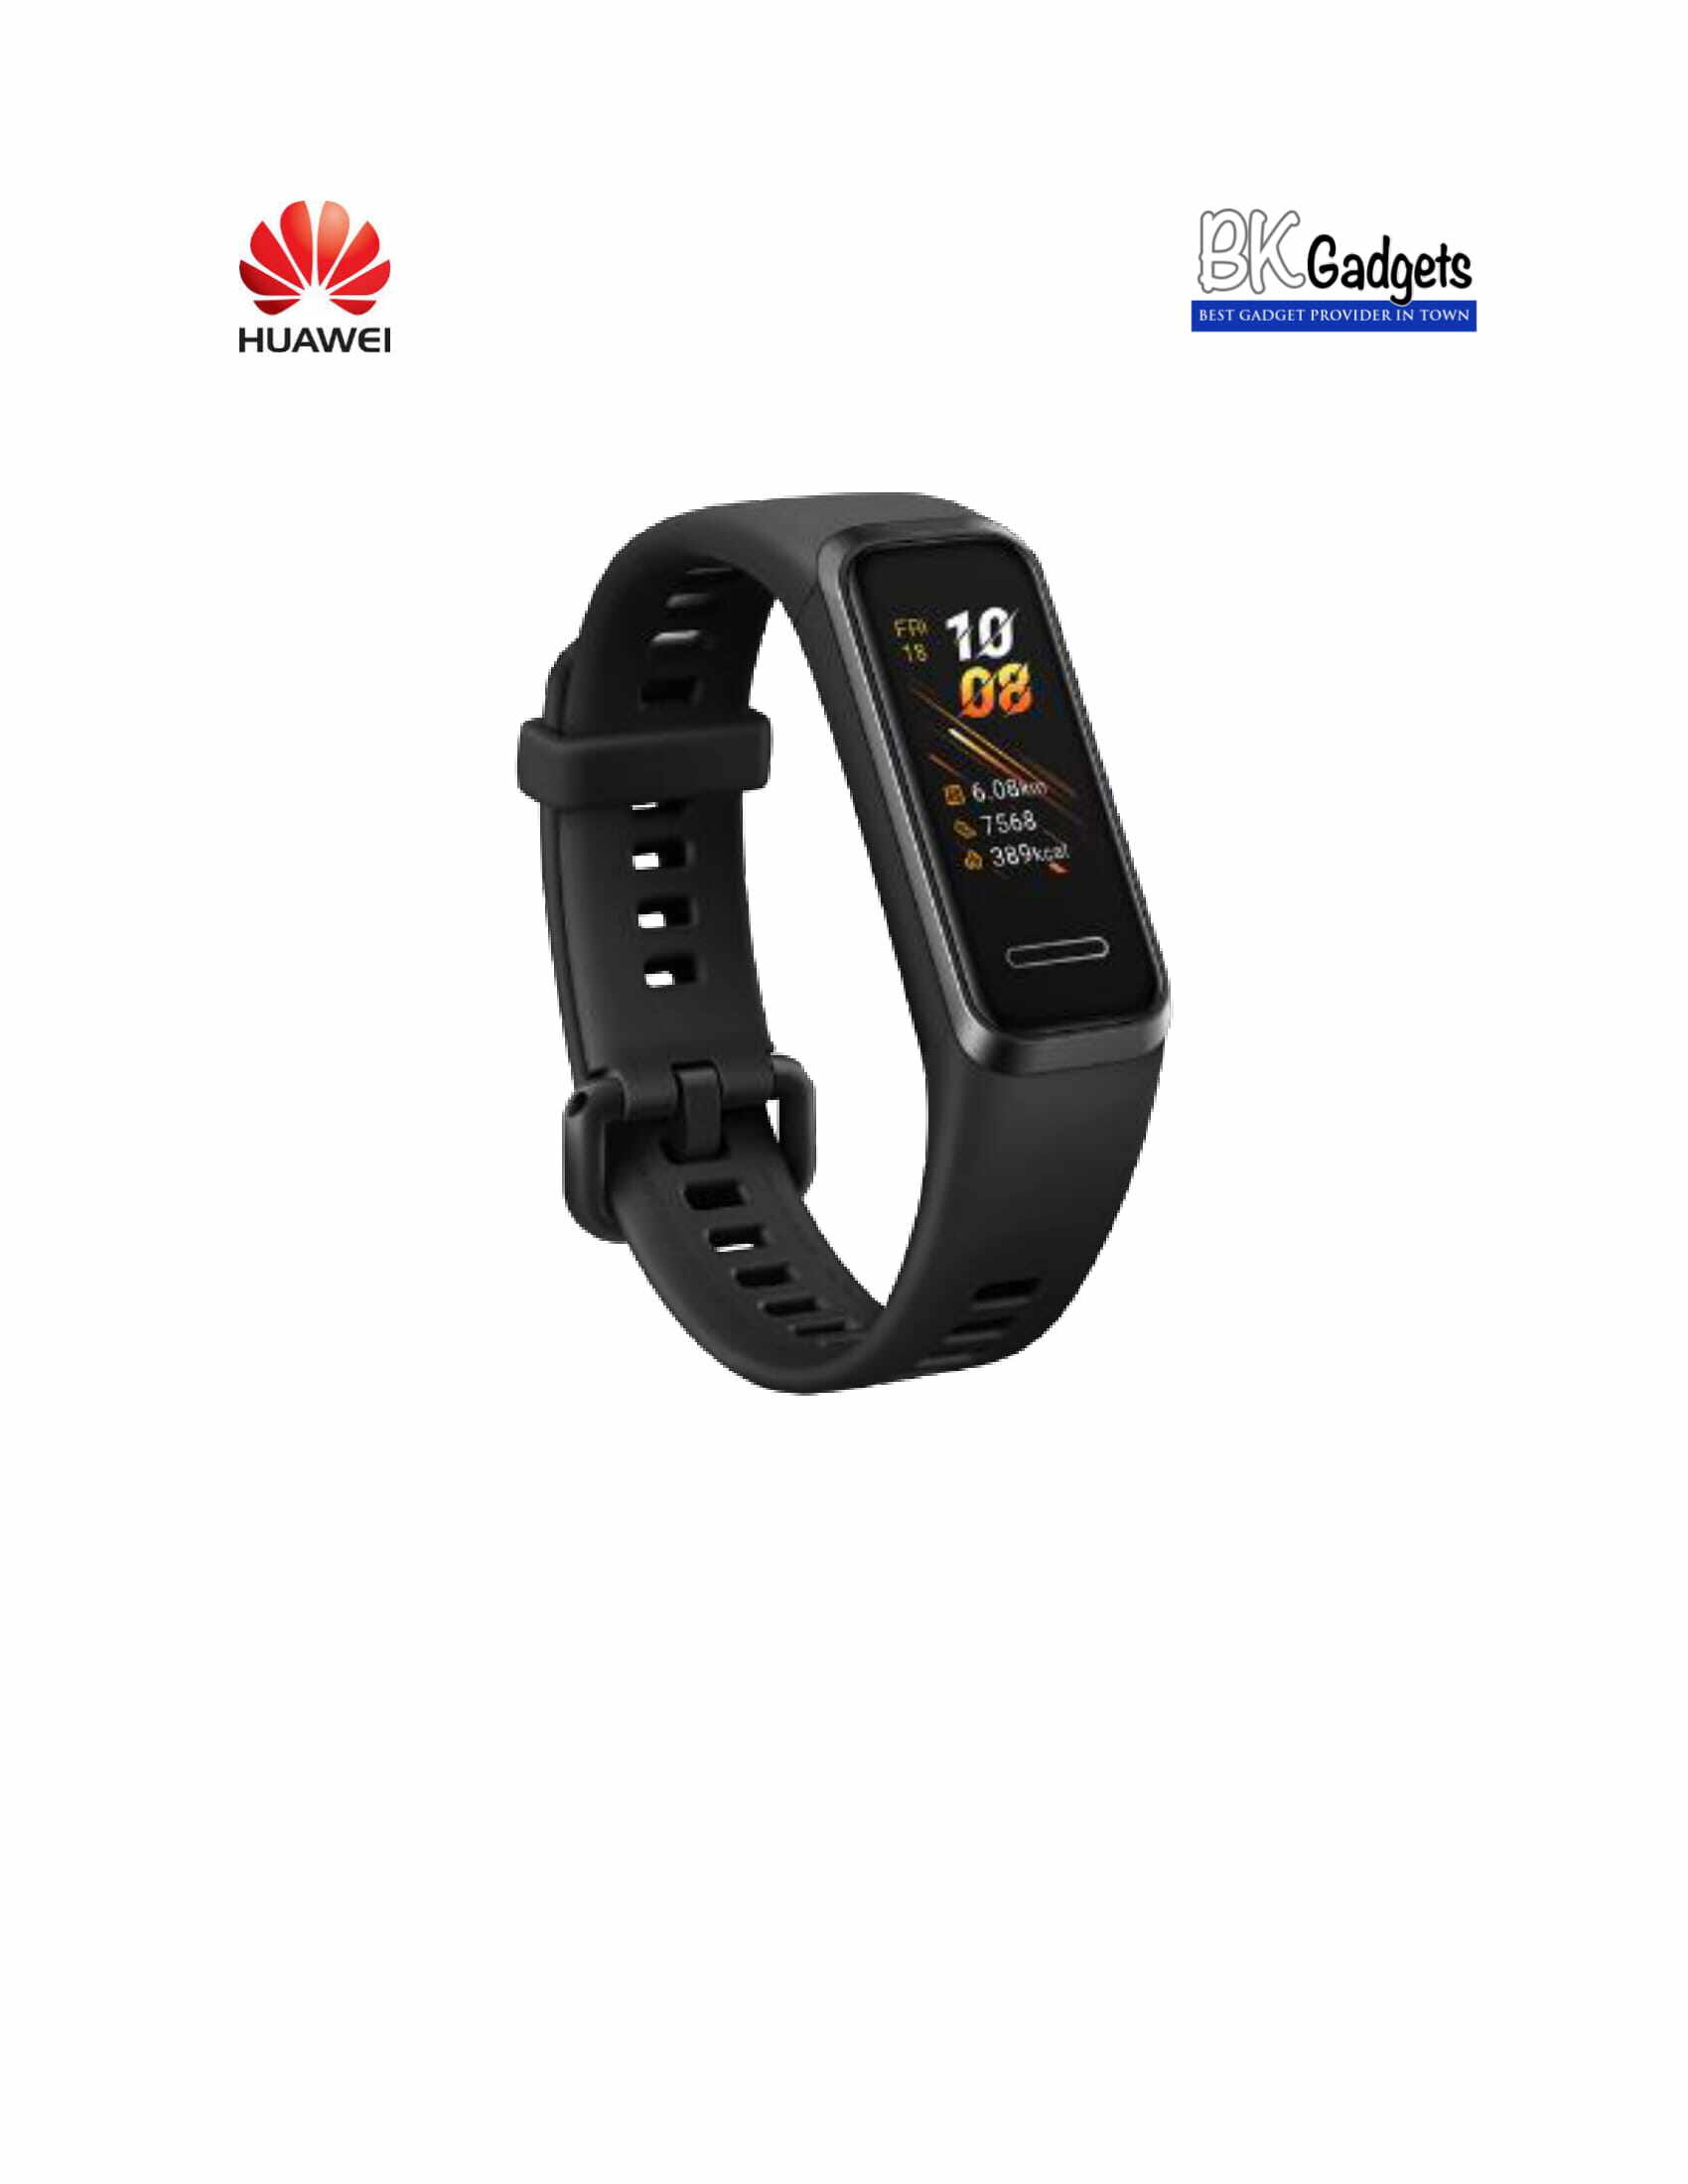 HUAWEI BAND 4 Color Screen Smart Wristband Wearable Fitness Tracker [ Meteorite Black ]